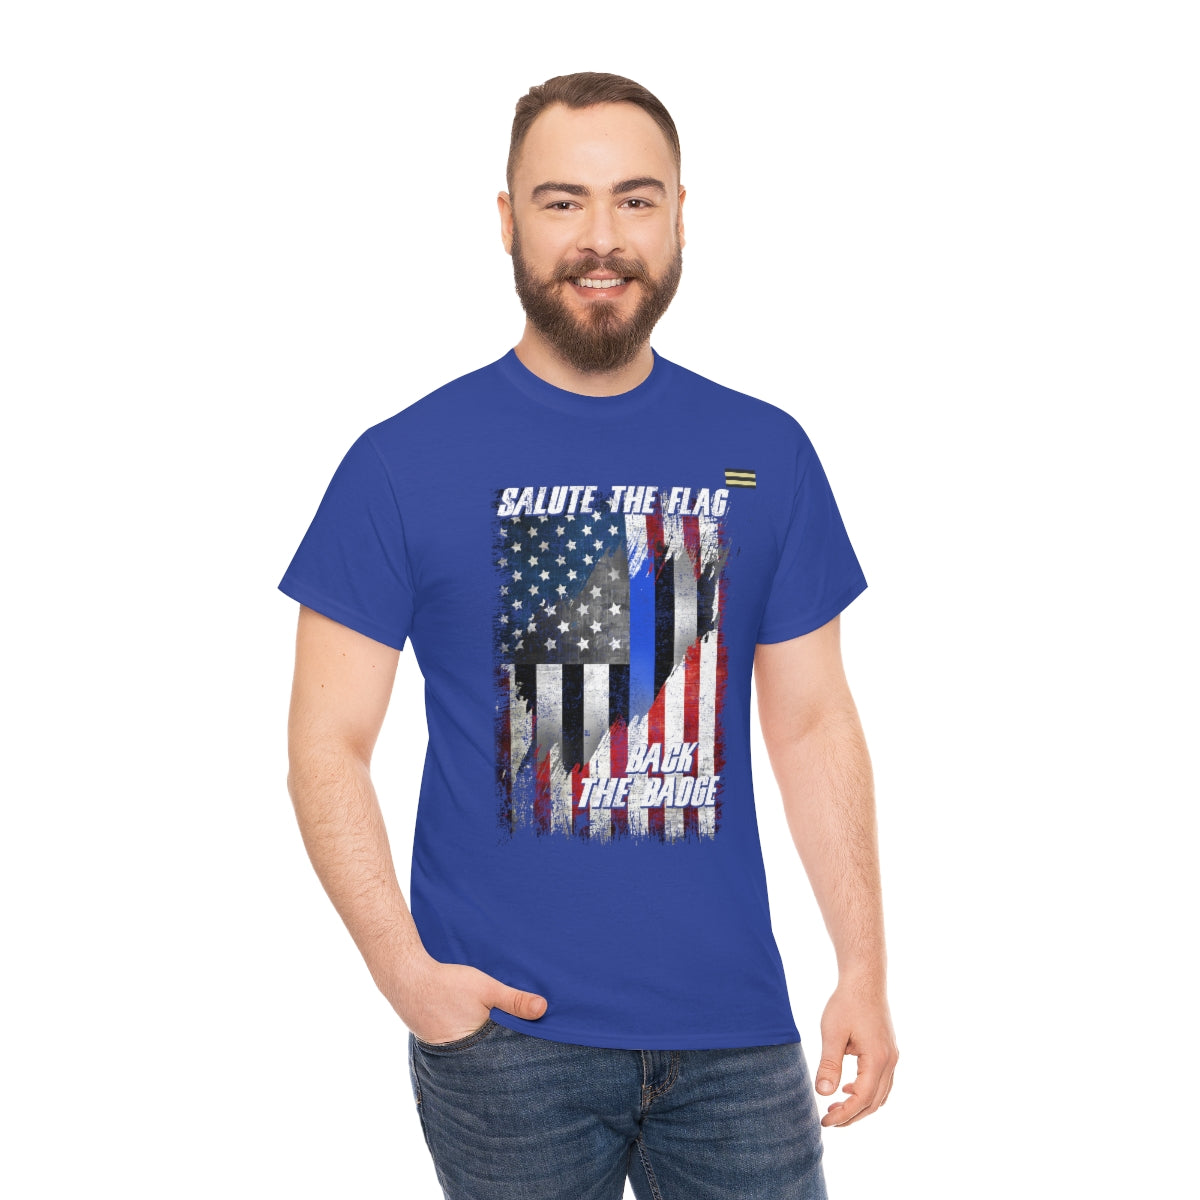 Salute The Flag-Back The Badge Law Enforcement T-shirt